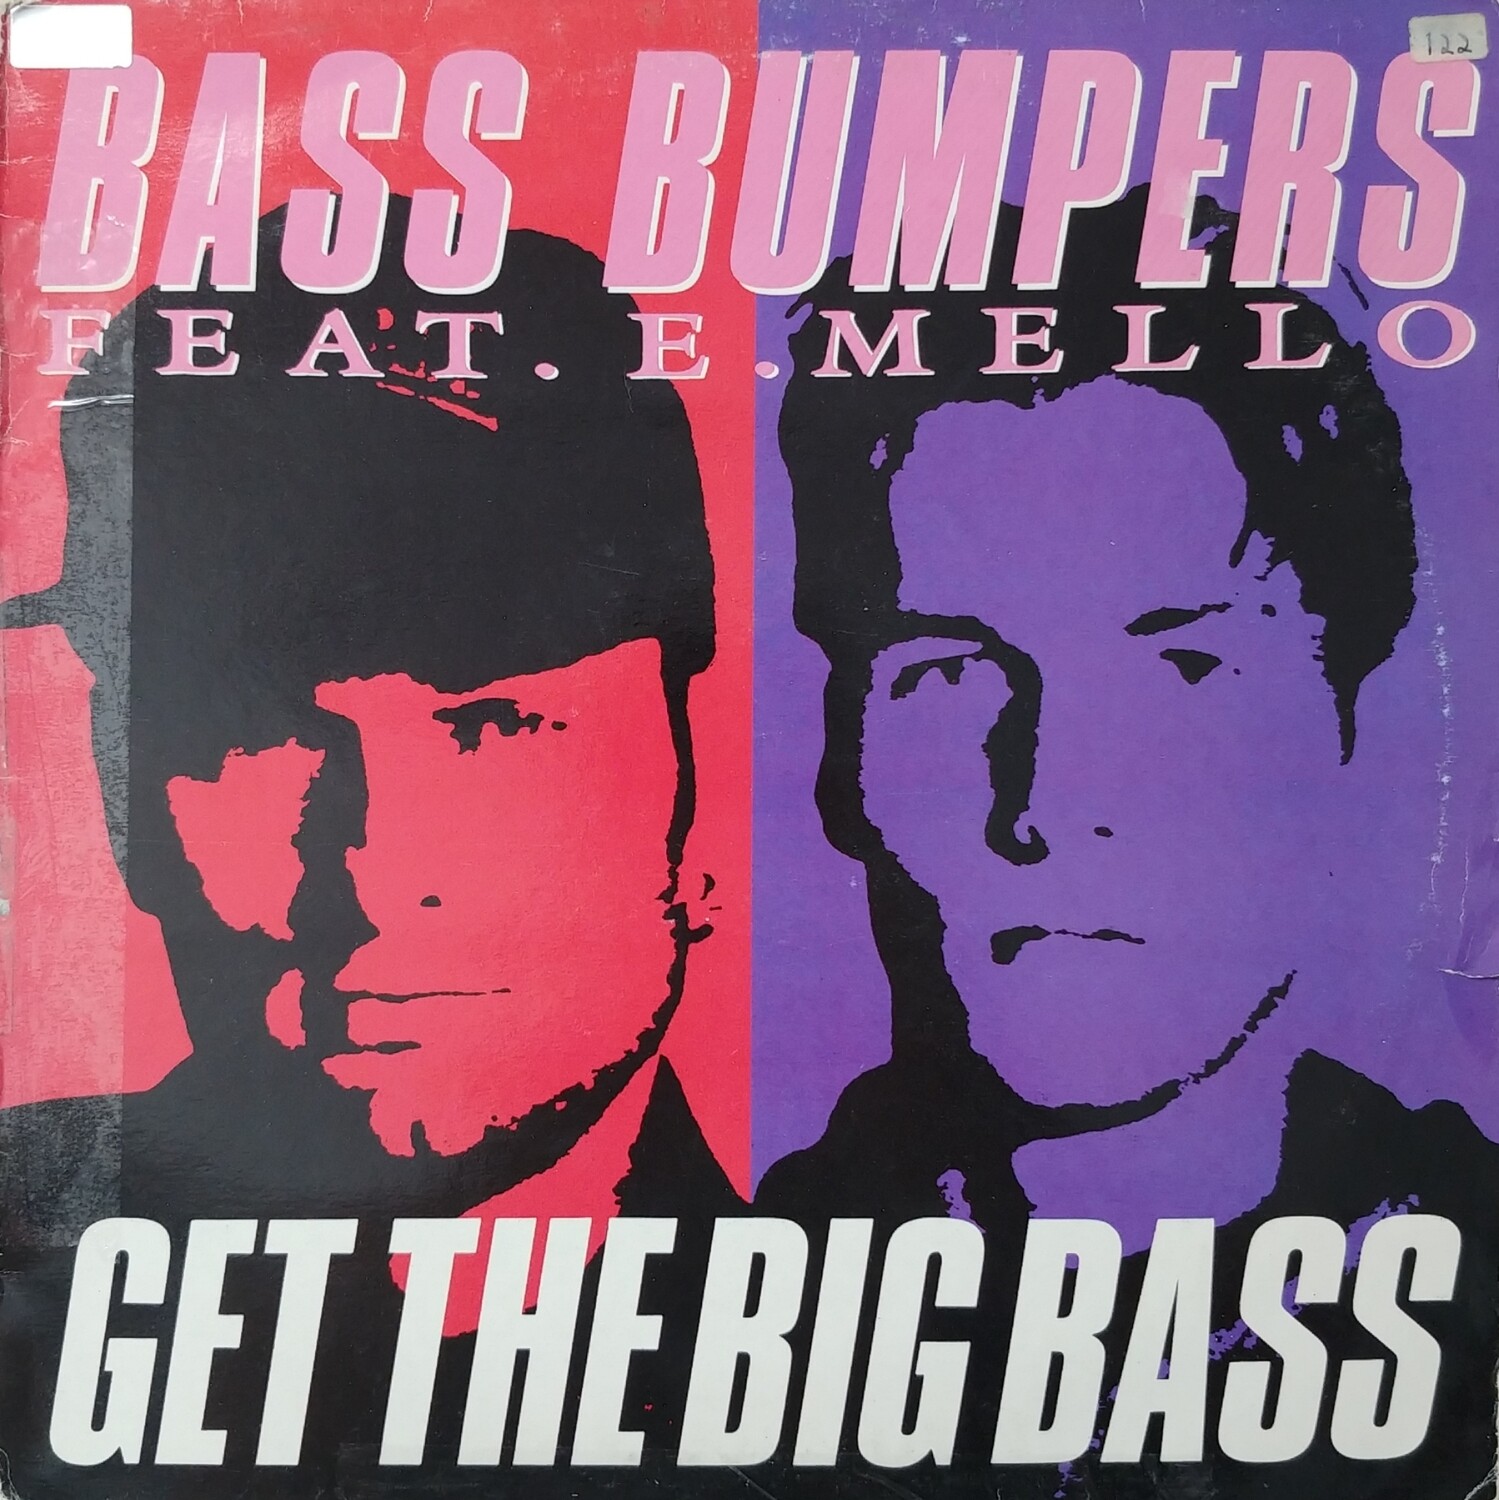 Bass Bumpers ft. E.Melio - Get the big bass